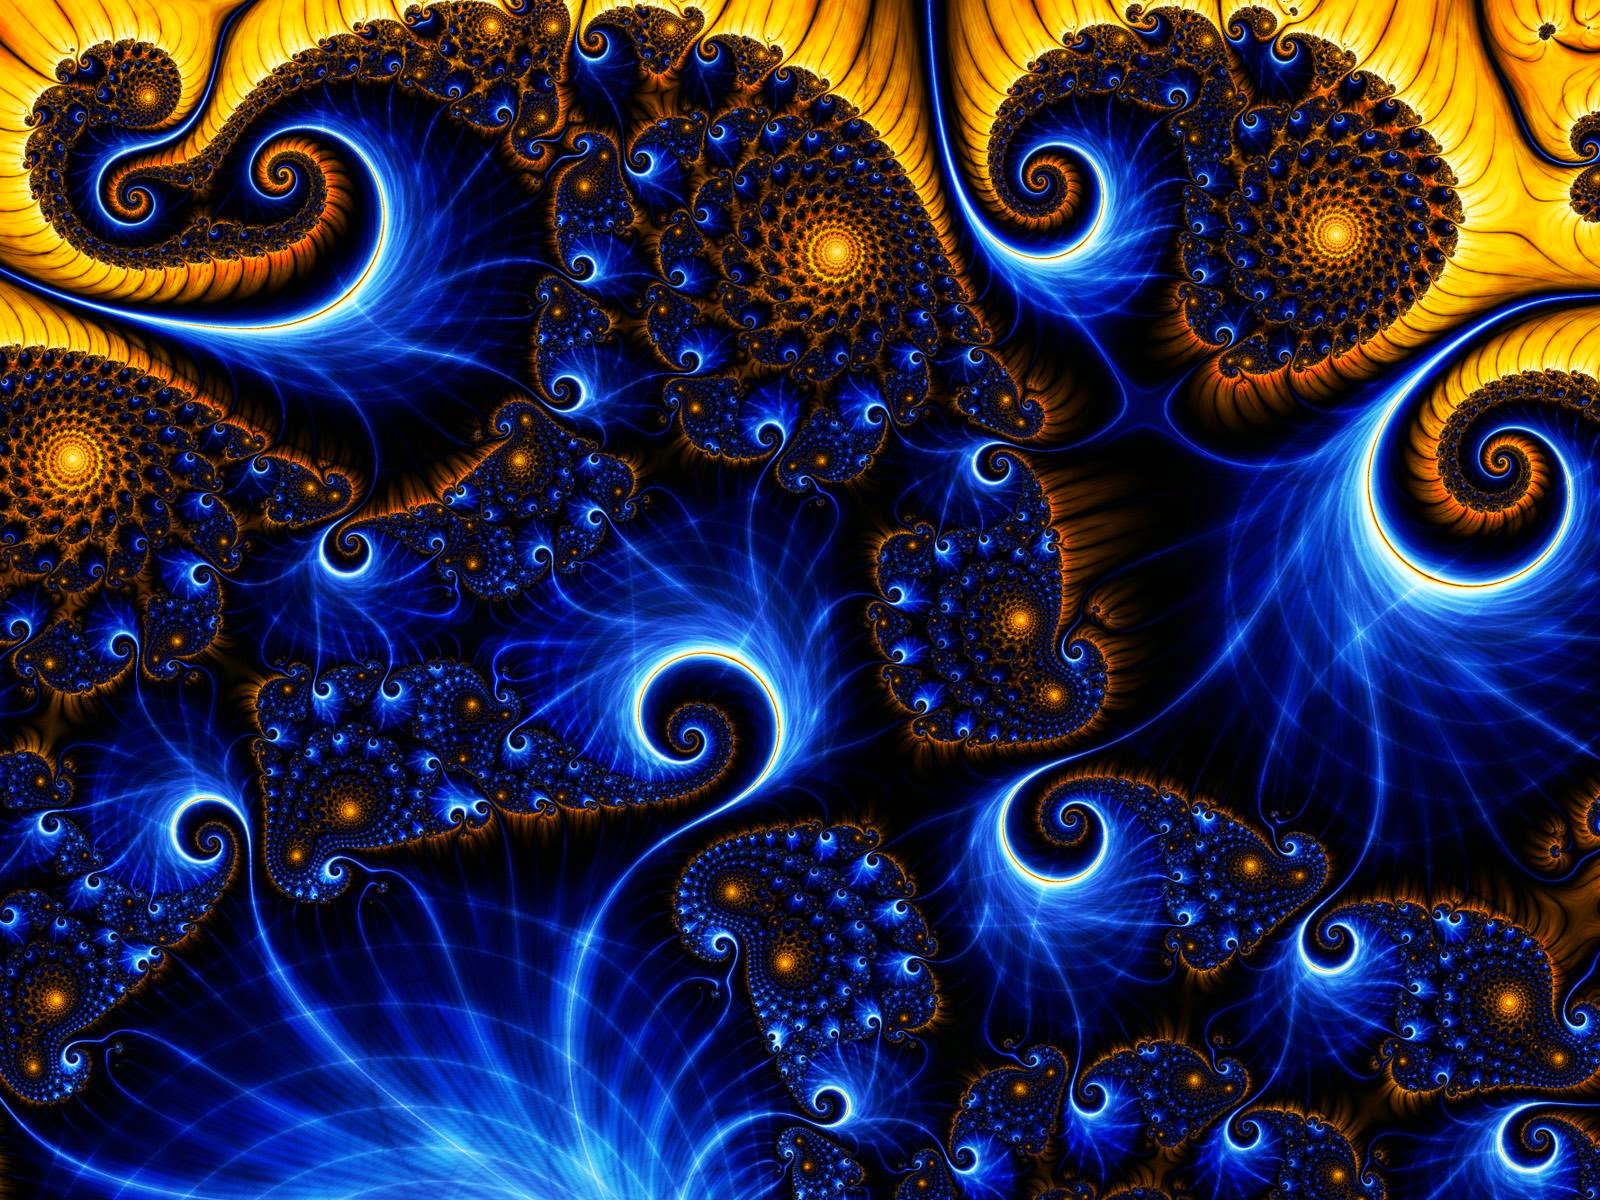 polaridad-tantrica-amarillo-azul-fractal-tantra-press-tantraesdevocion-inciensoshop